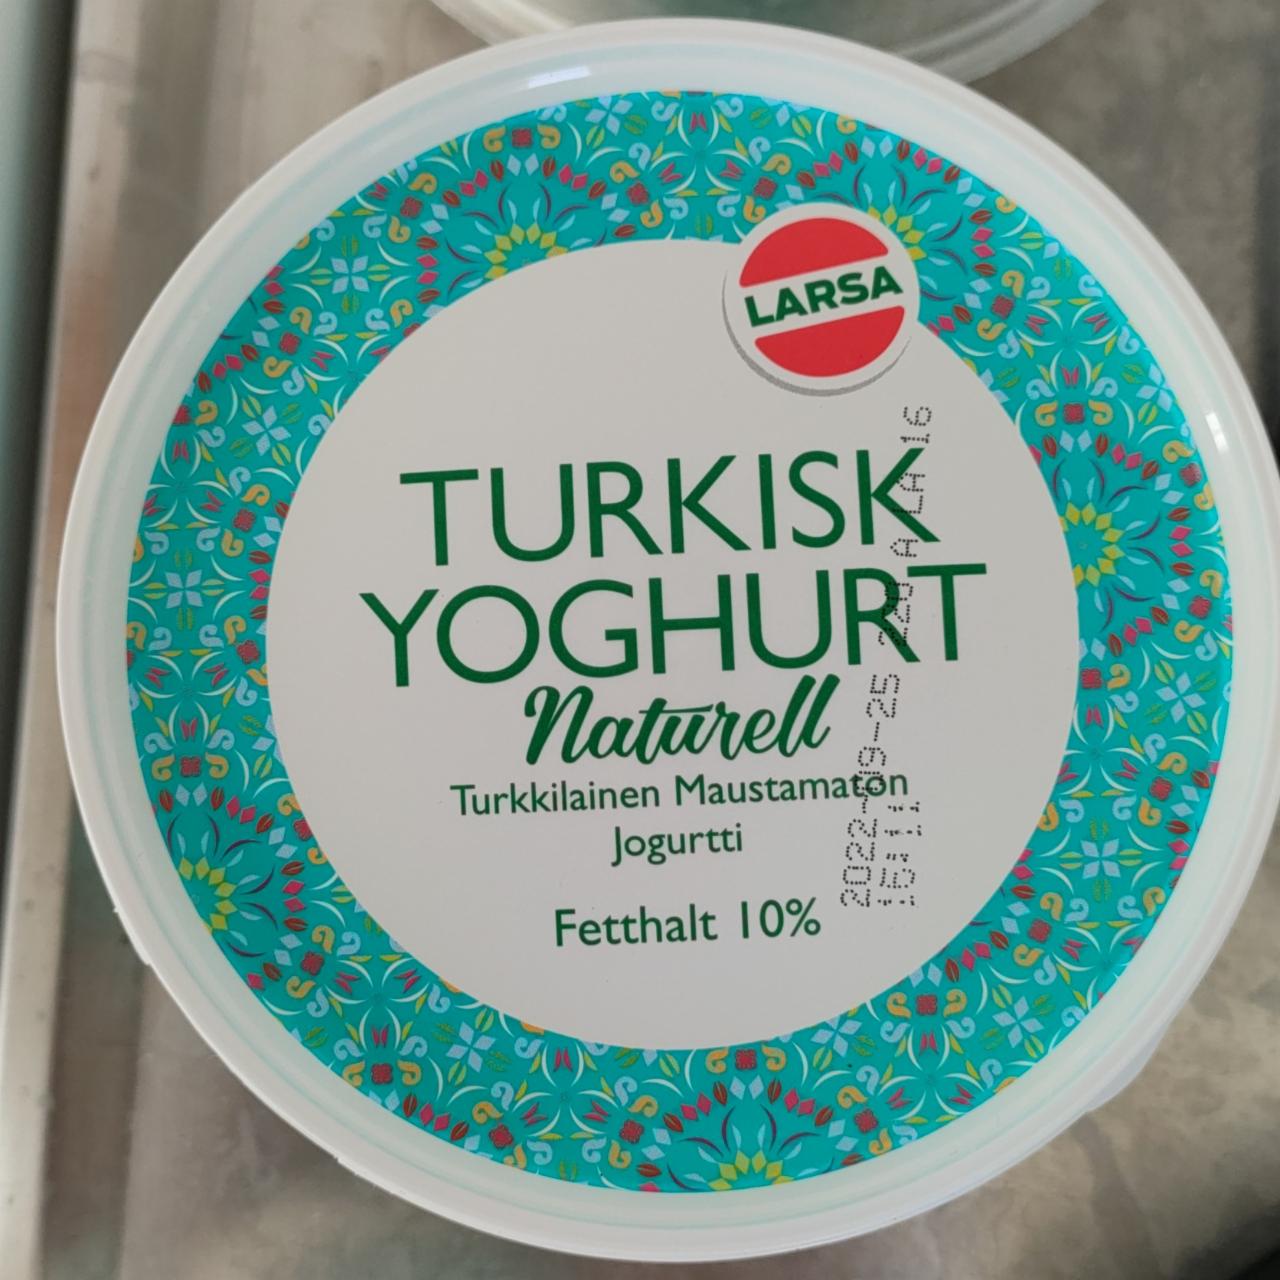 Fotografie - Turkisk Yoghurt Naturell 10% Larsa